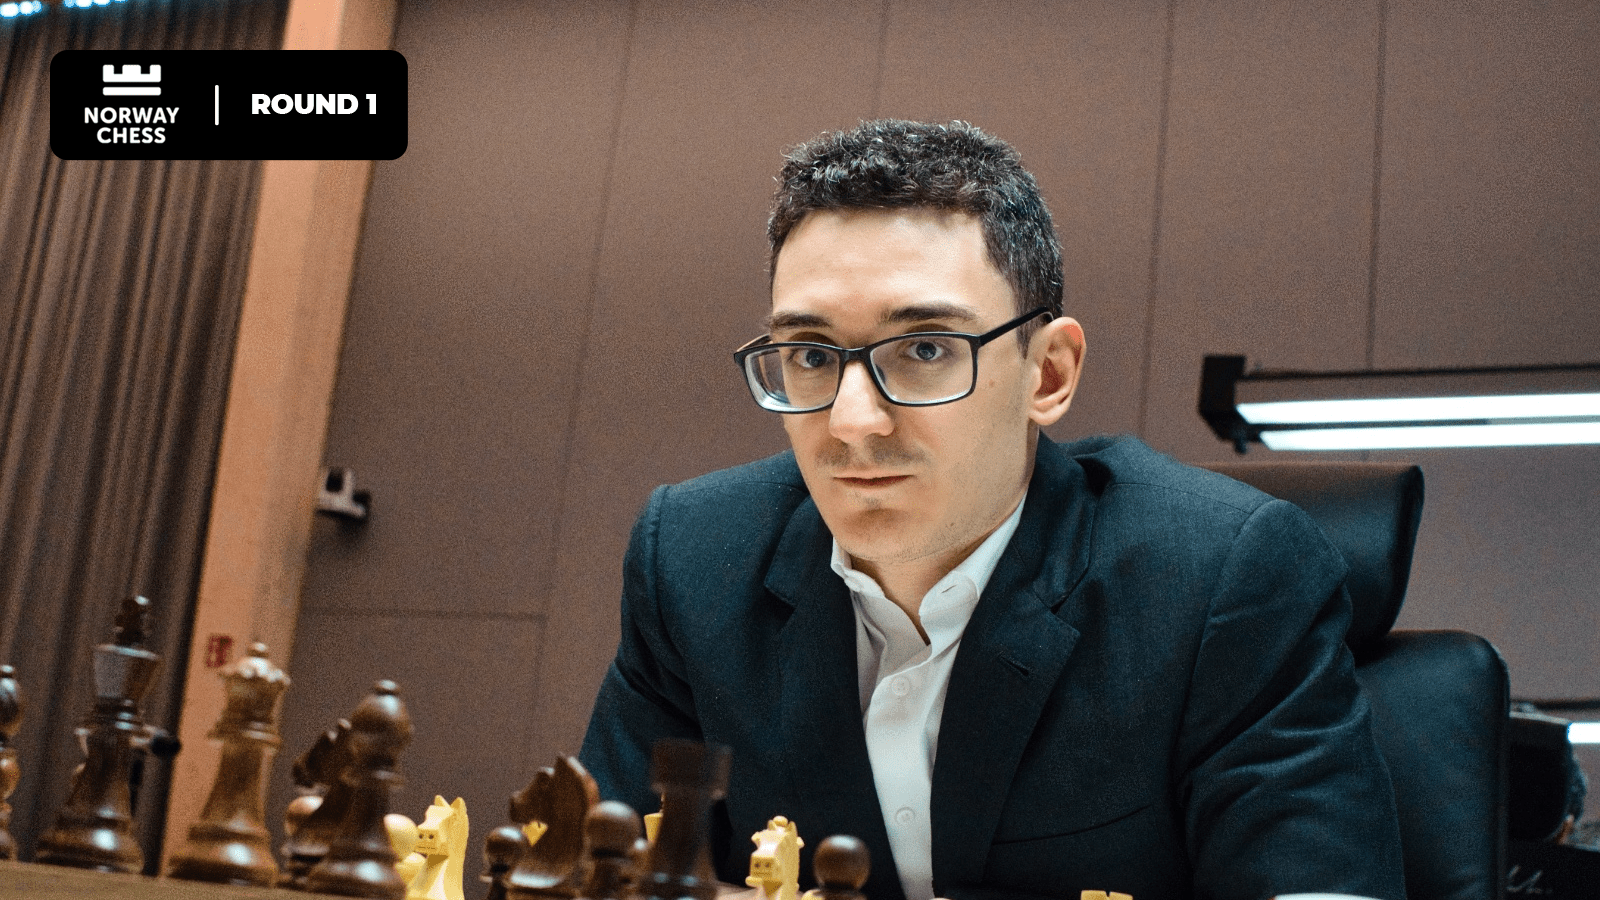 Fabiano Caruana vs Magnus Carlsen (2023)